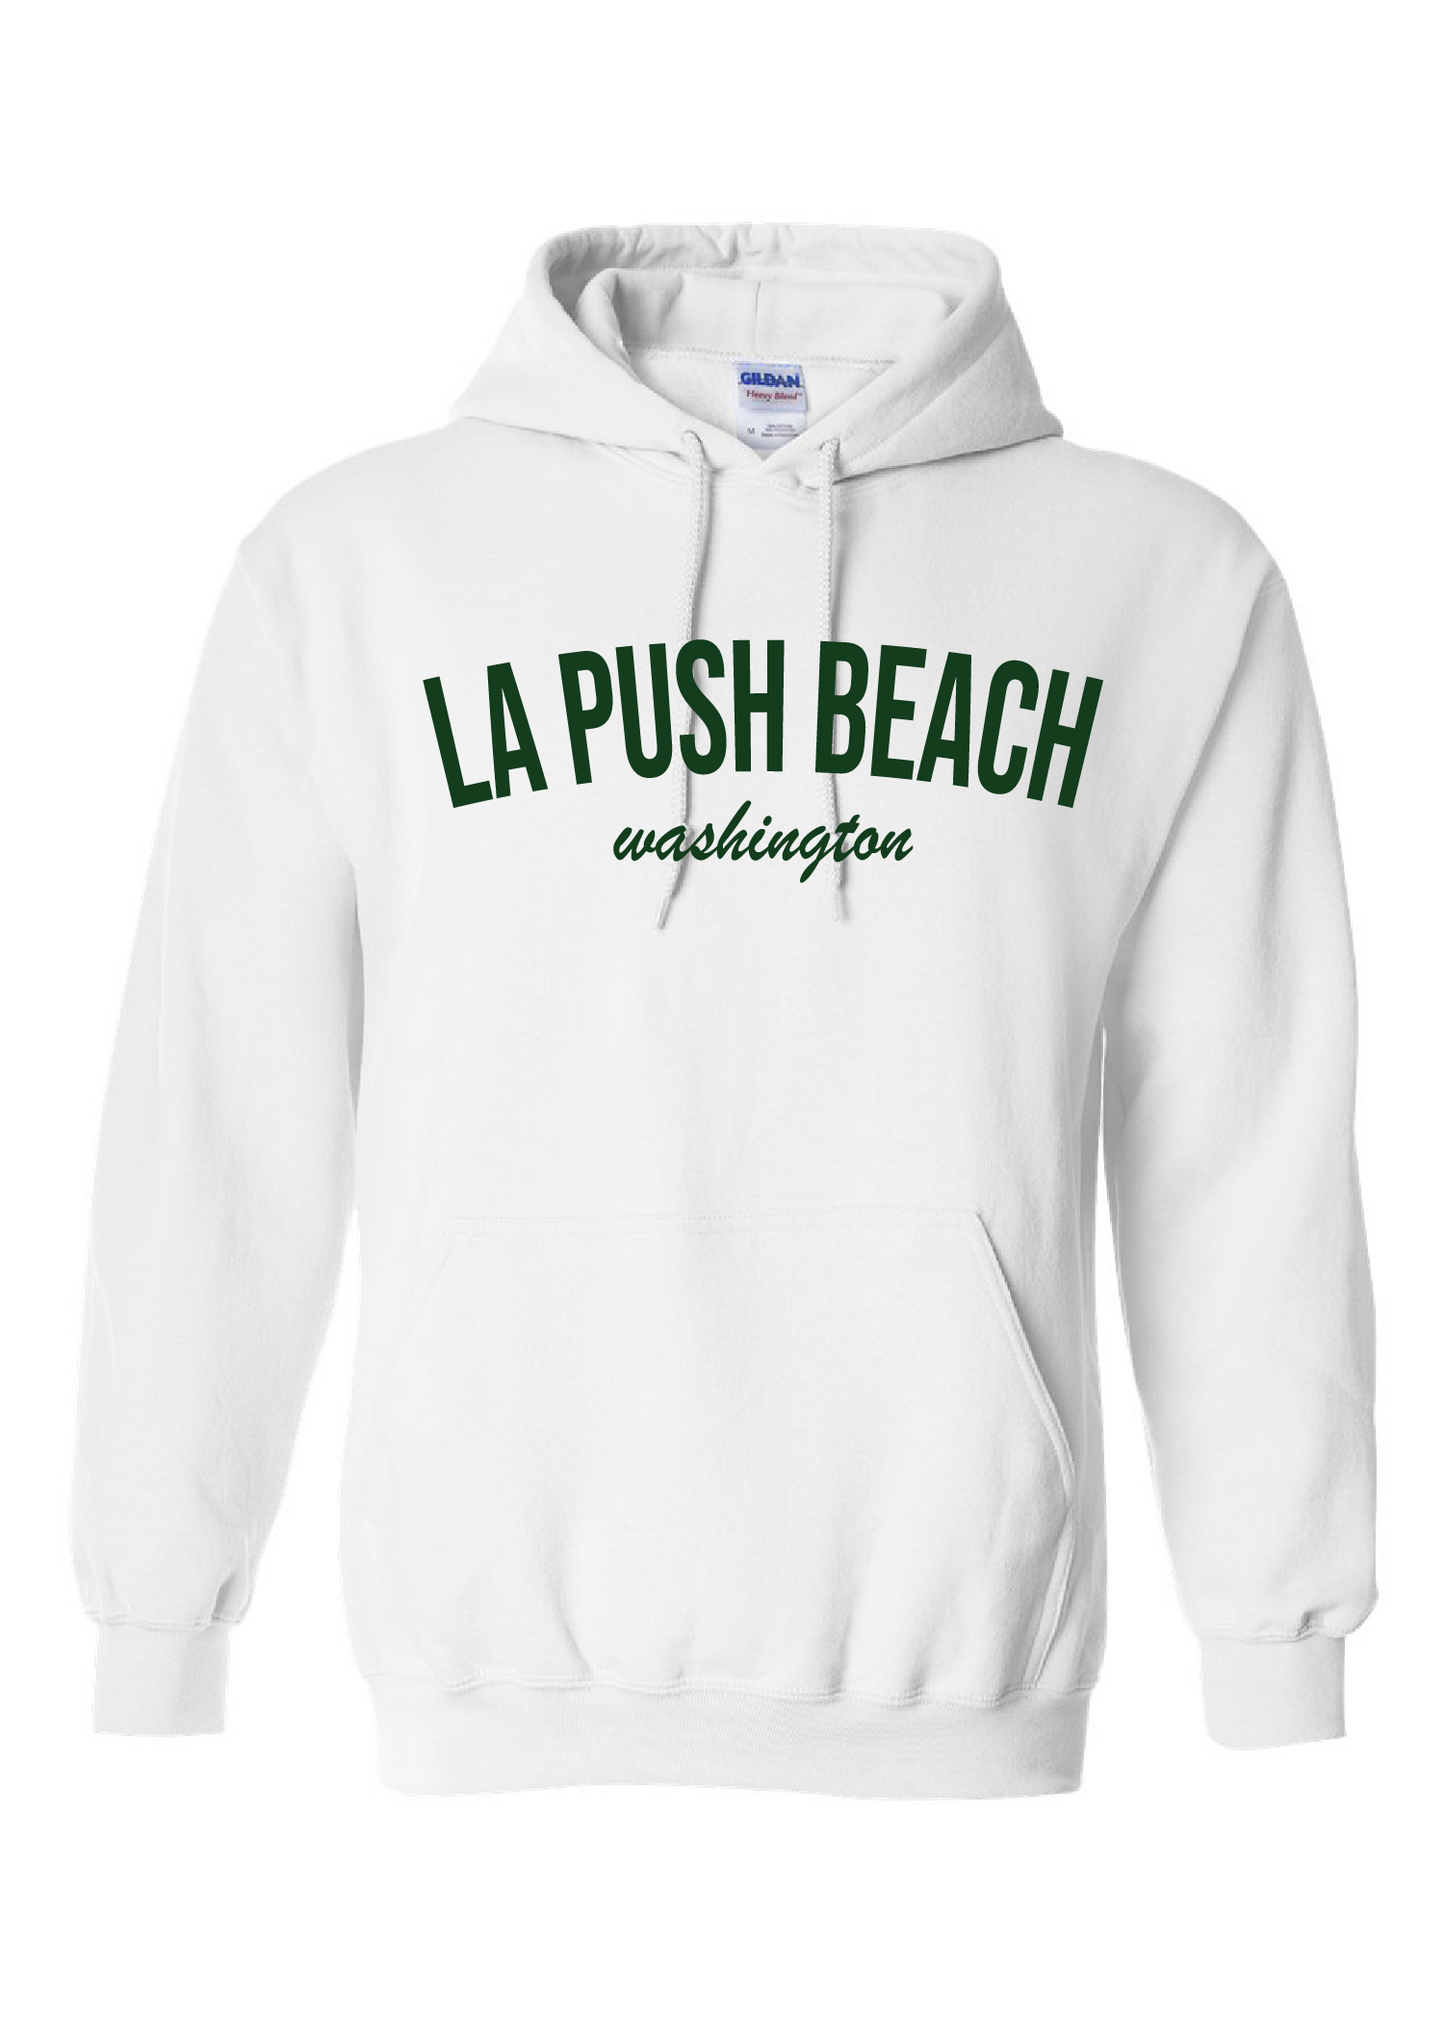 La Push Beach Crew/Hoodie